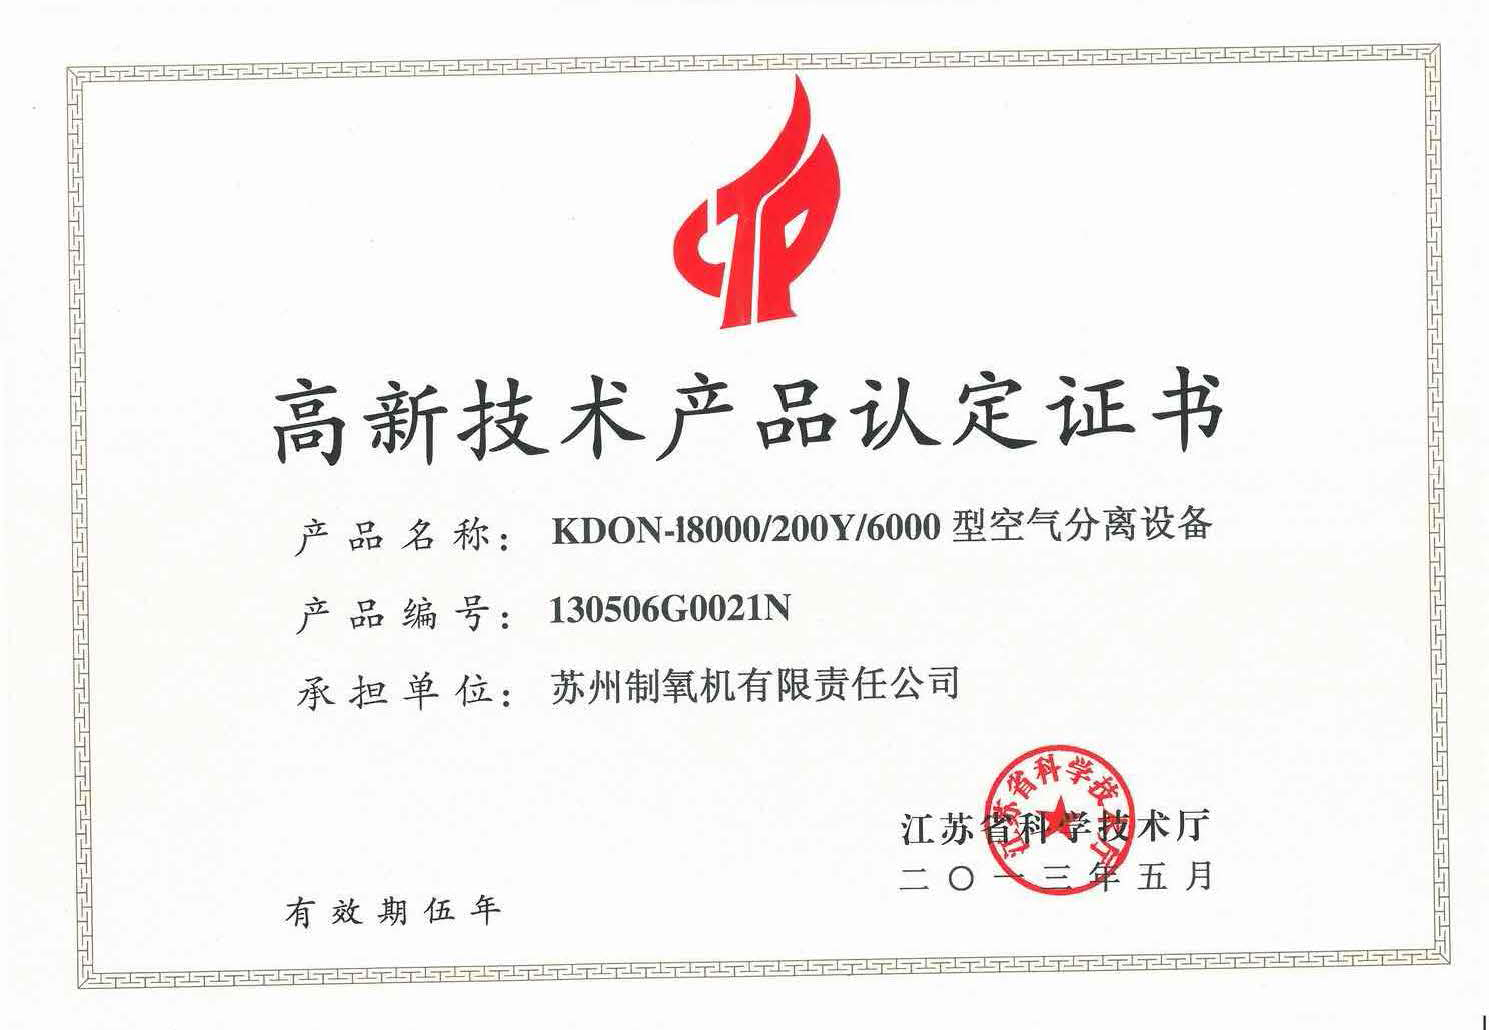 KDON-18000/200Y/6000 空气分离设备